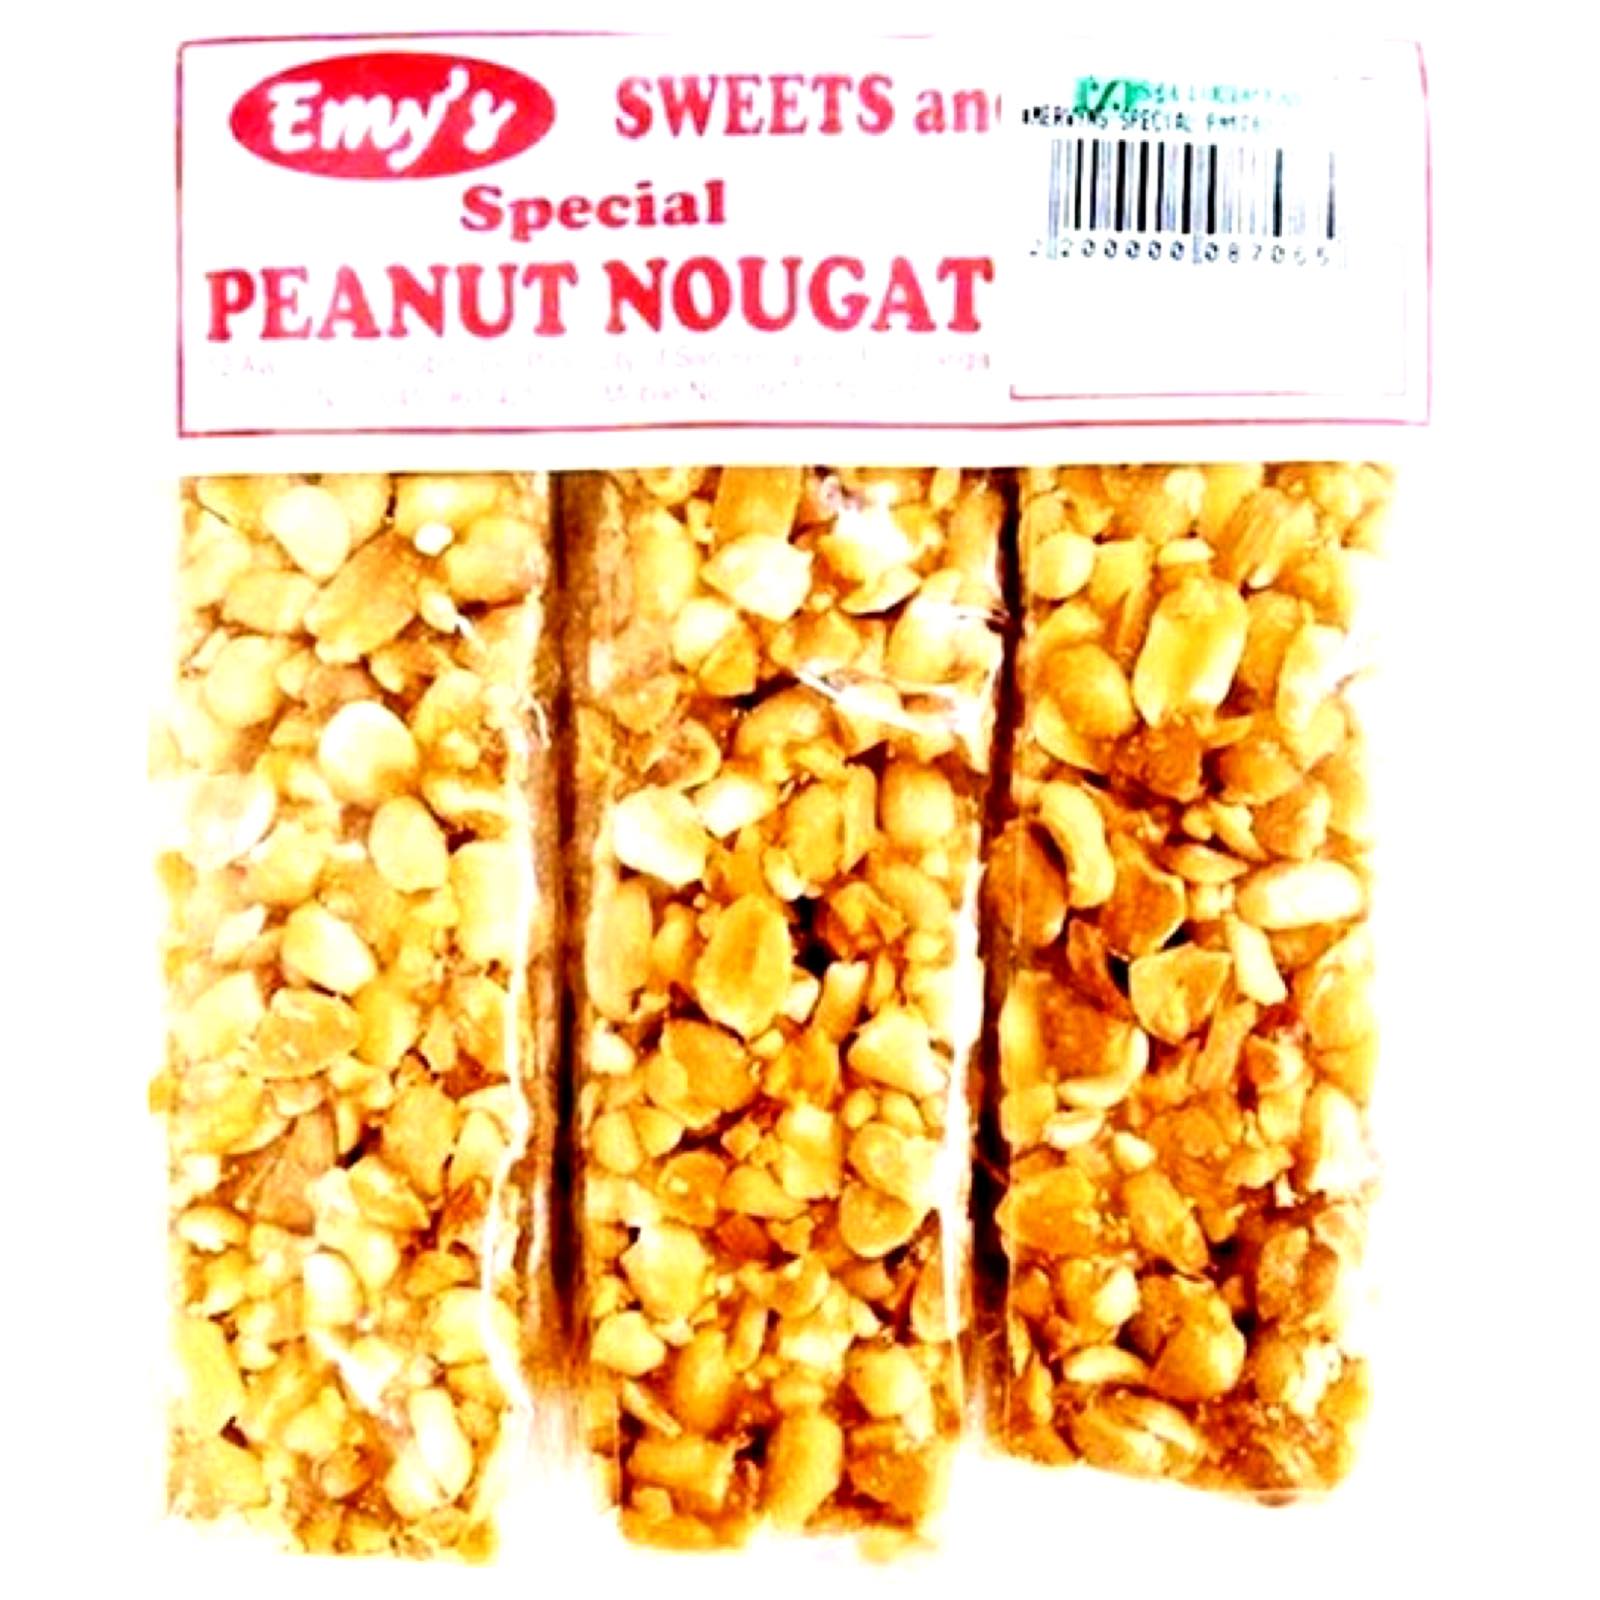 Emy's - Special Peanut Nougat - 175 G